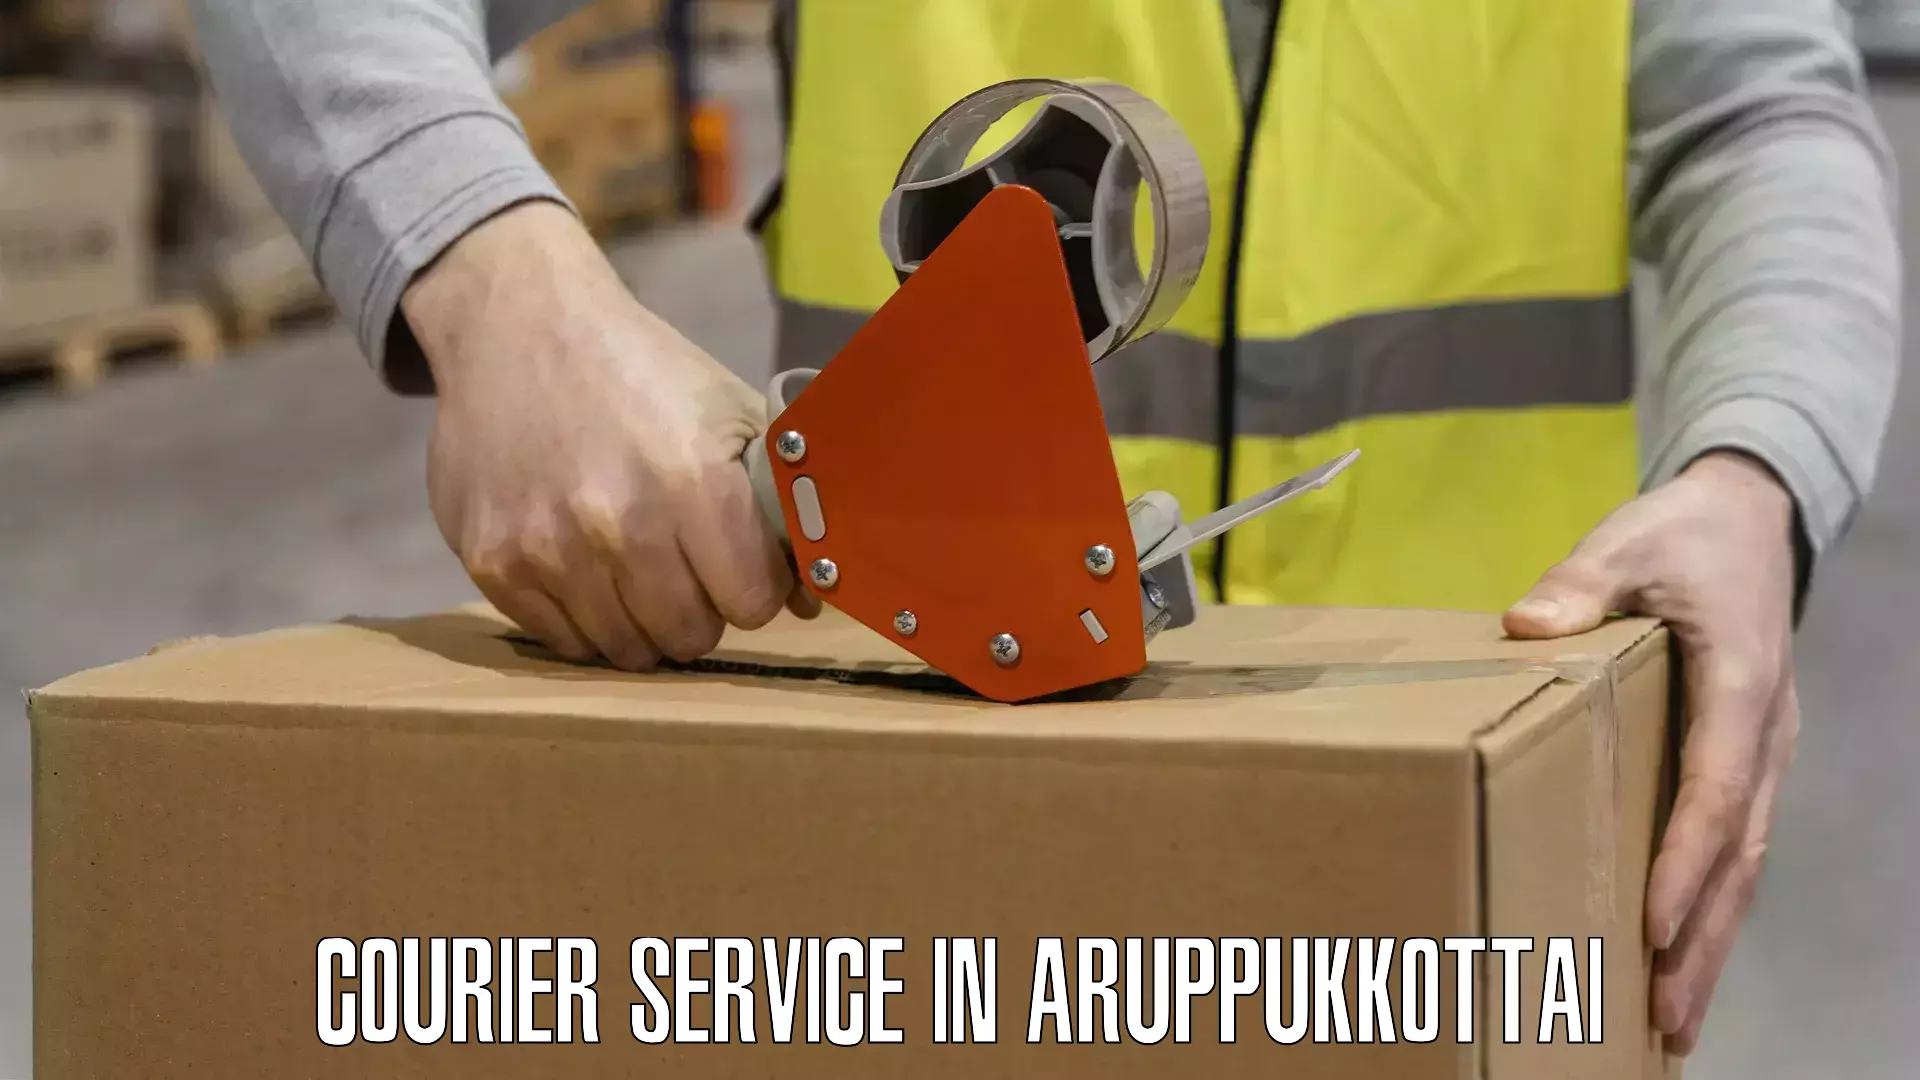 Full-service courier options in Aruppukkottai